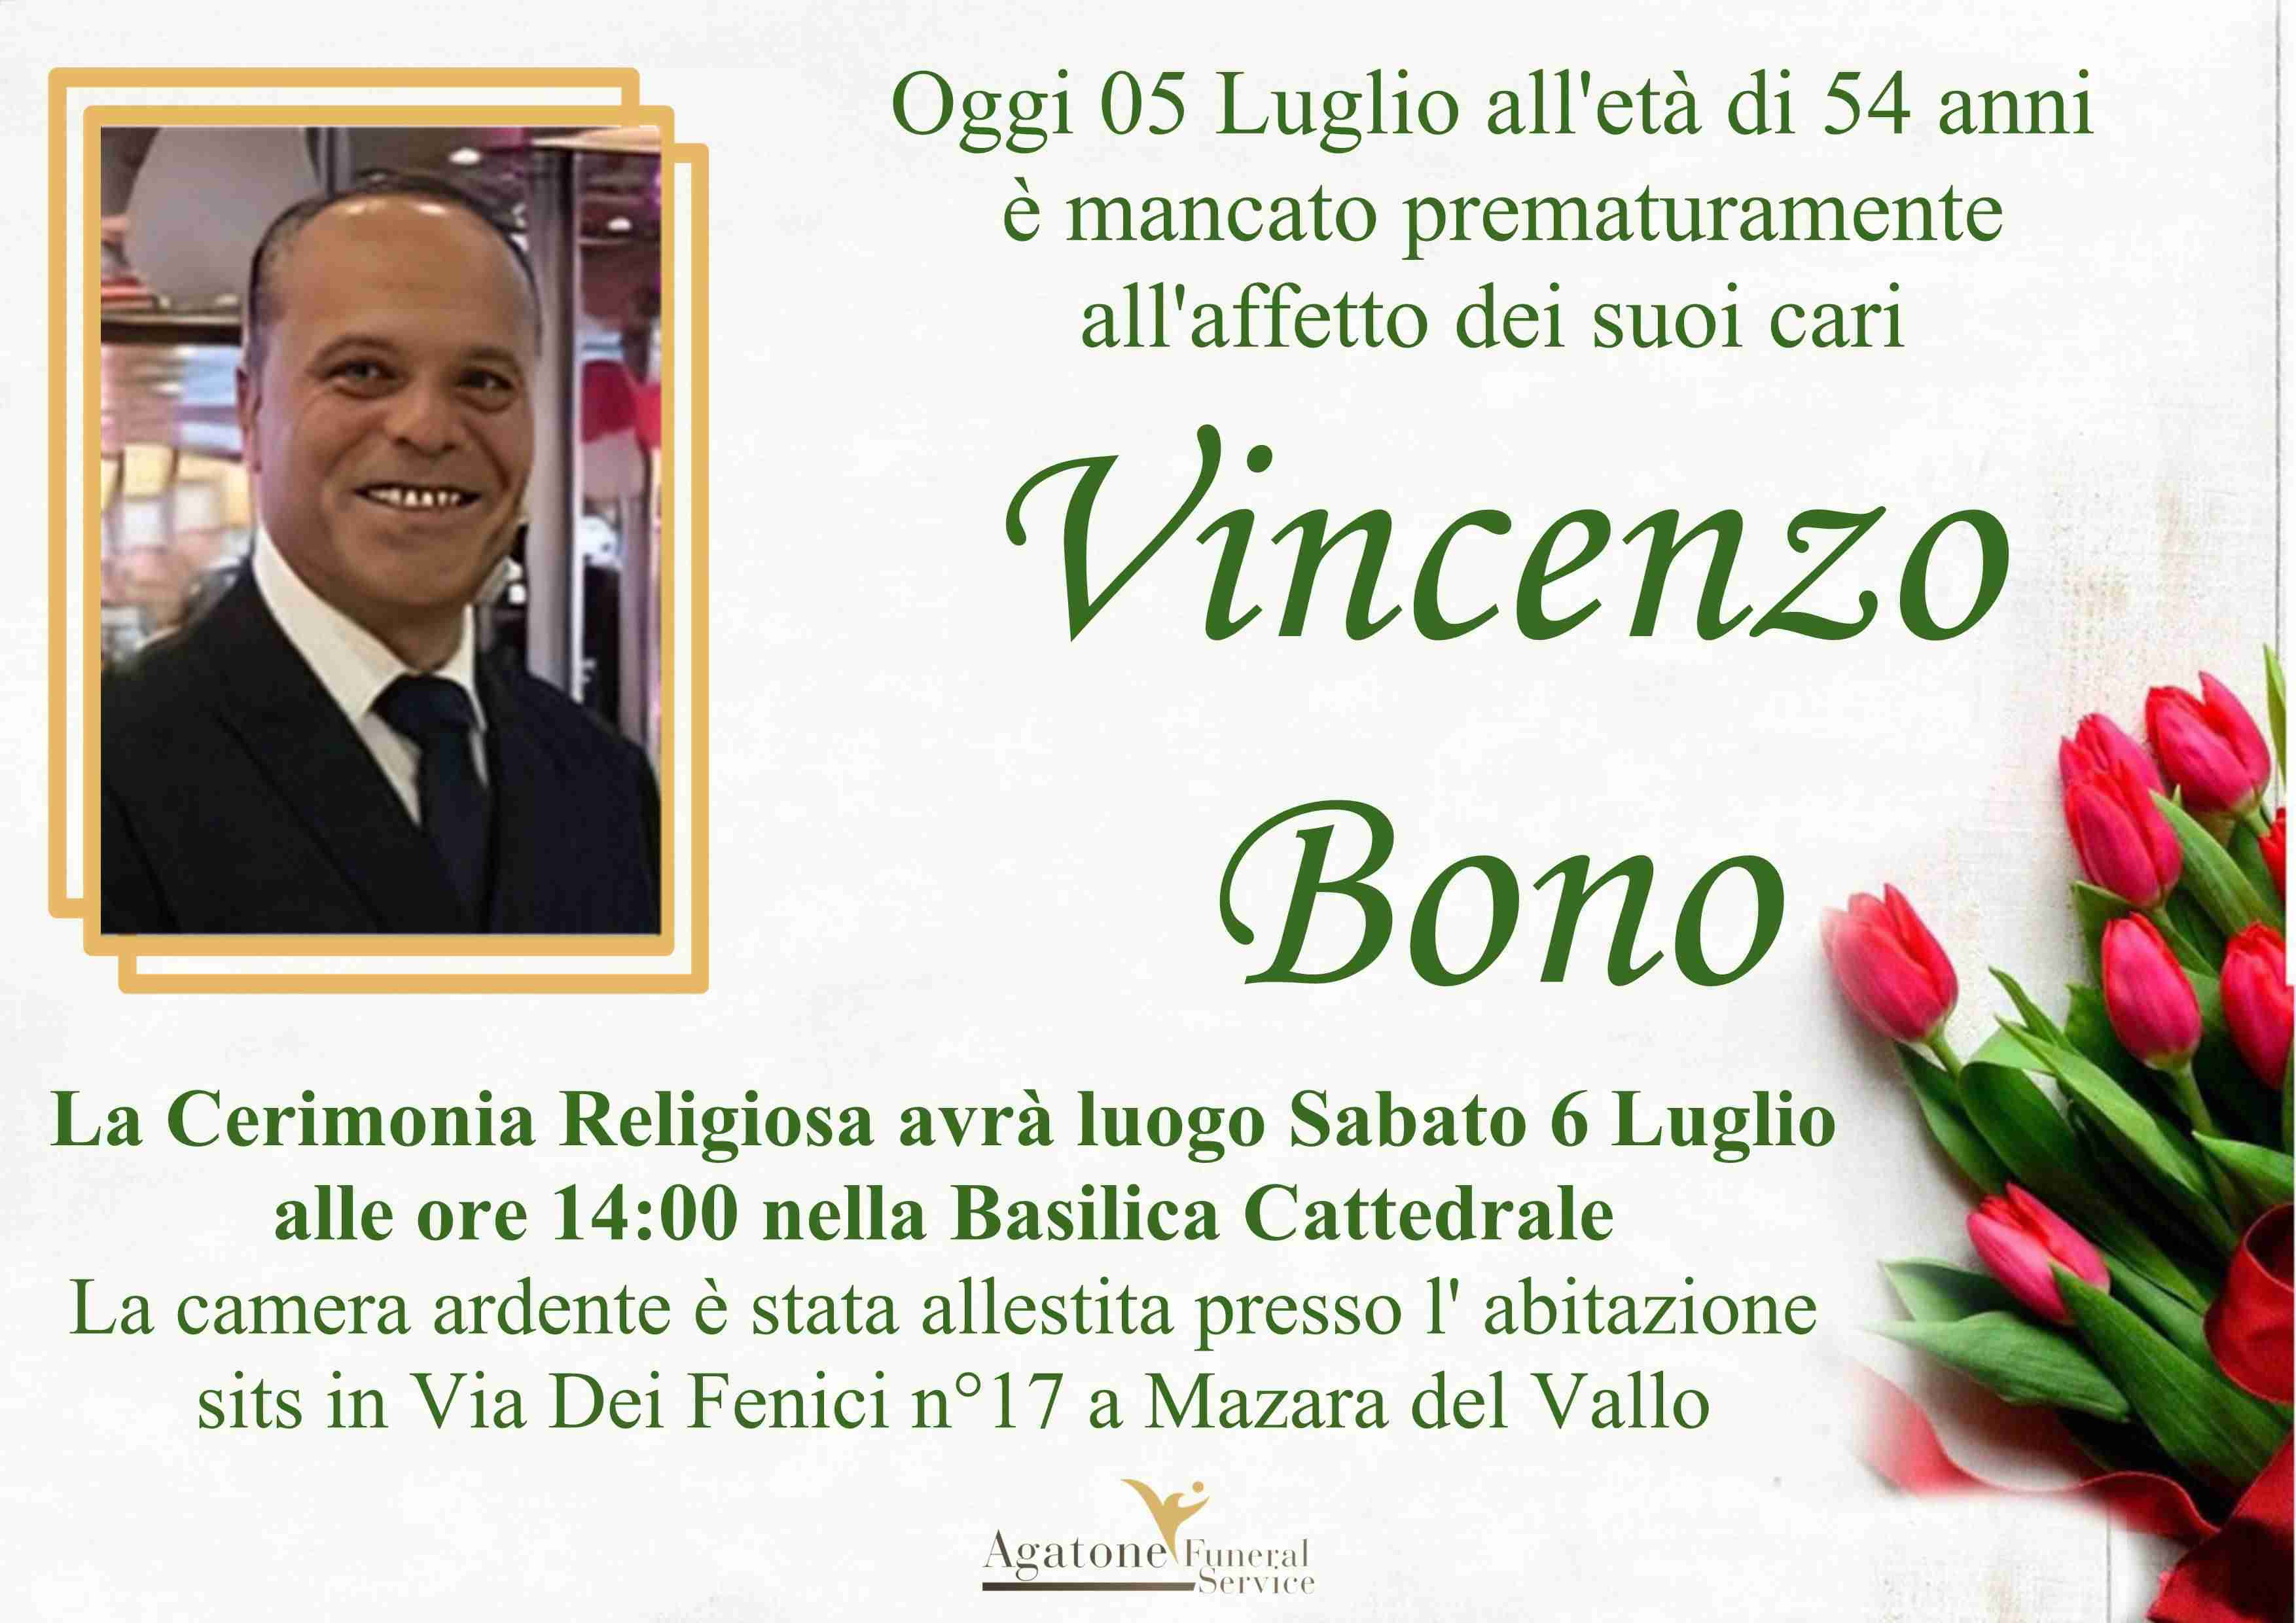 Vincenzo Bono